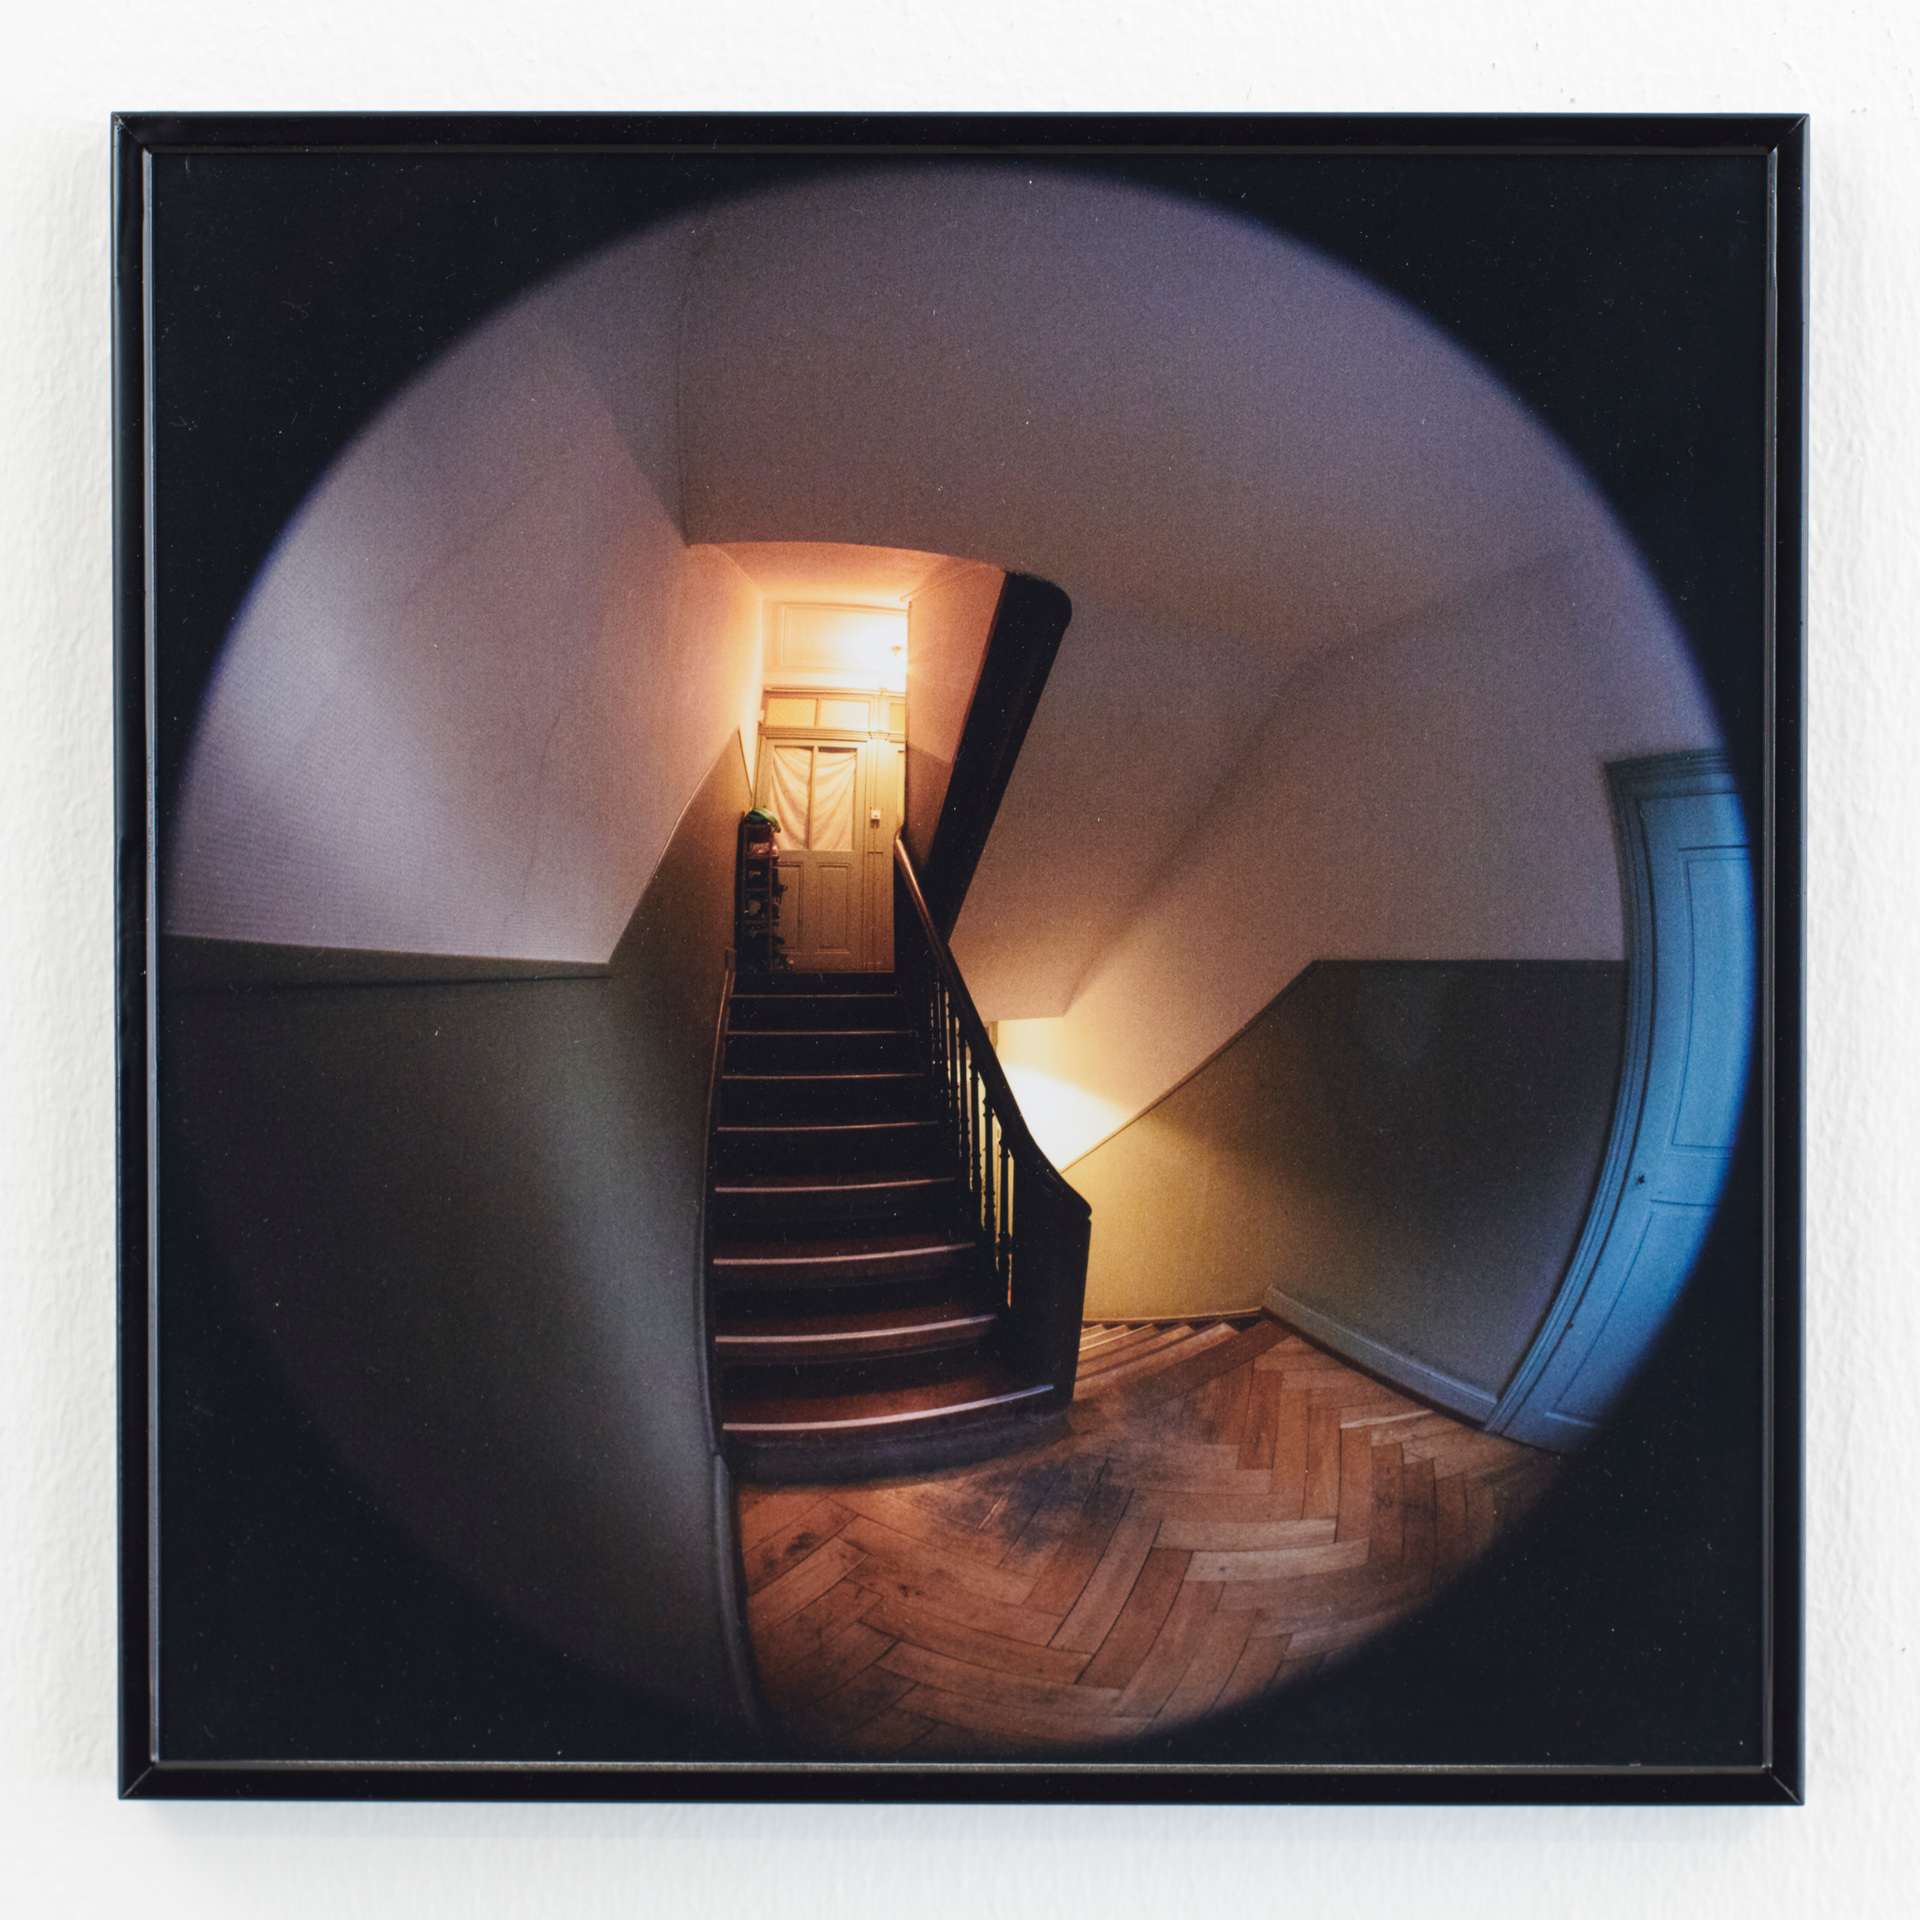 Emanuel Rossetti, “Stairs”, 2020
Digitaler C-Print, 30x30cm, gerahmt
Photo Credit: Flavio Karrer
Courtesy: Karma International, Zürich